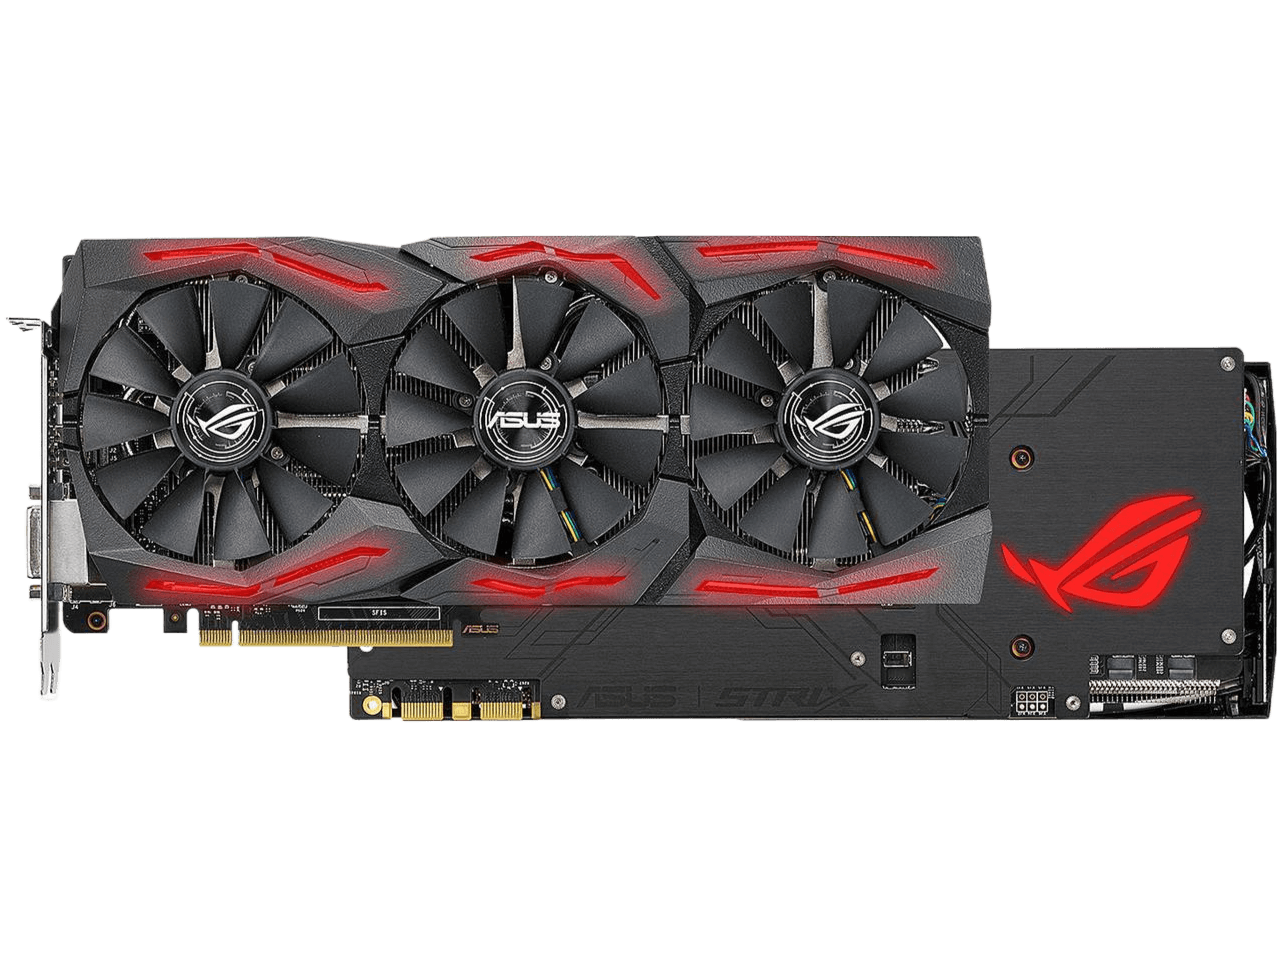 ASUS ROG STRIX AMD Radeon RX 5600 XT OC Edition Gaming Graphics Card Full HD Gaming Axial-tech Fan Design Metal Backplate ROG-STRIX-RX5600XT-O6G-GAMING